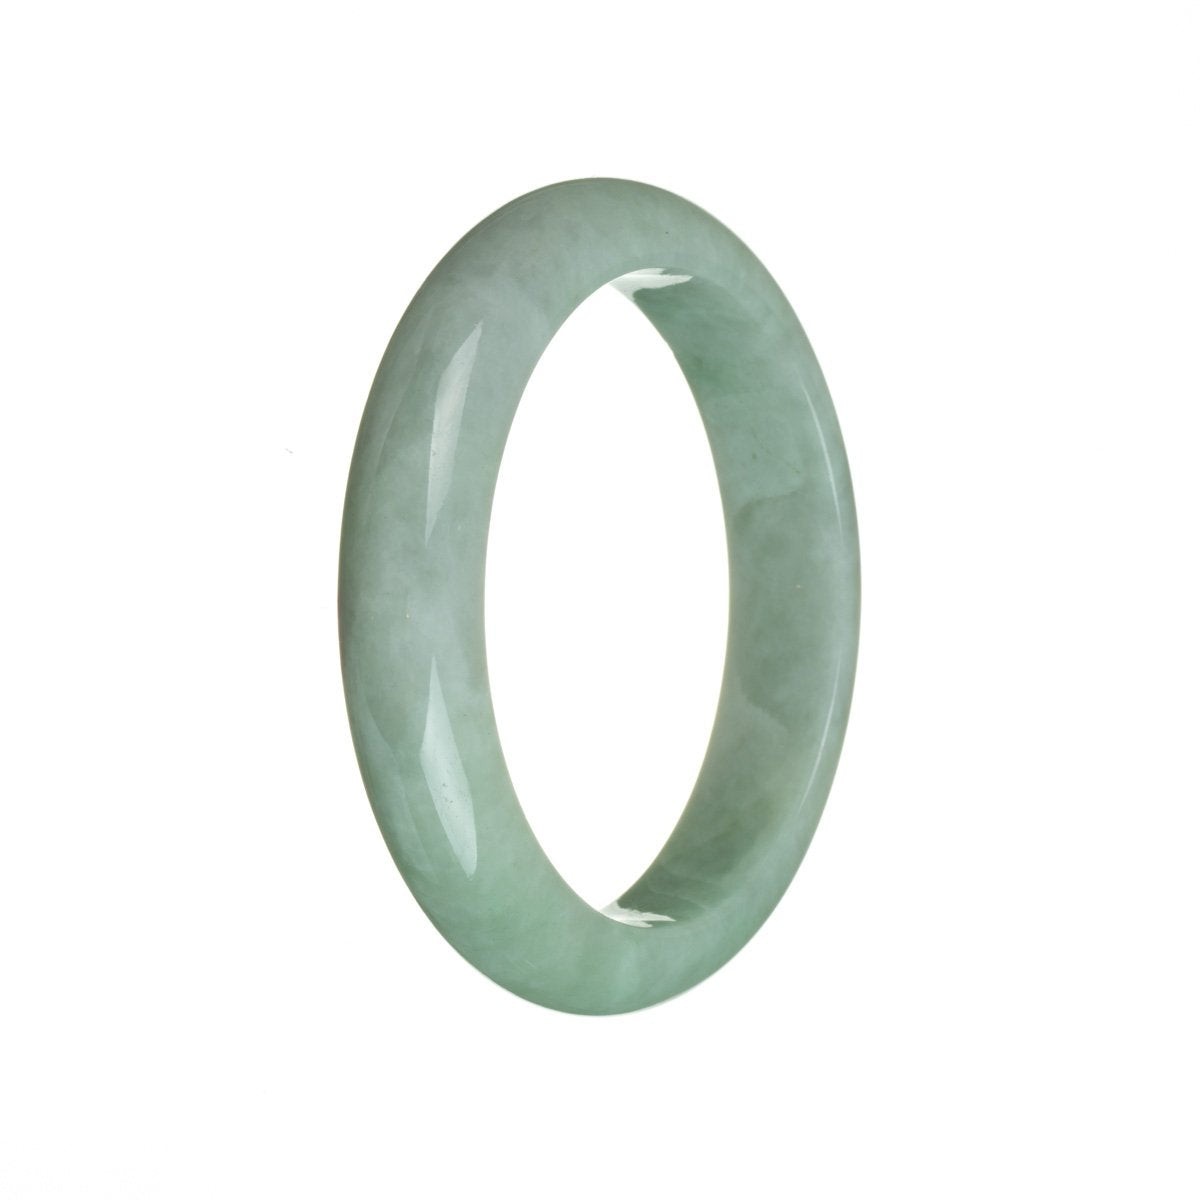 A light green Burmese Jade bangle with a semi-round shape, measuring 58mm.